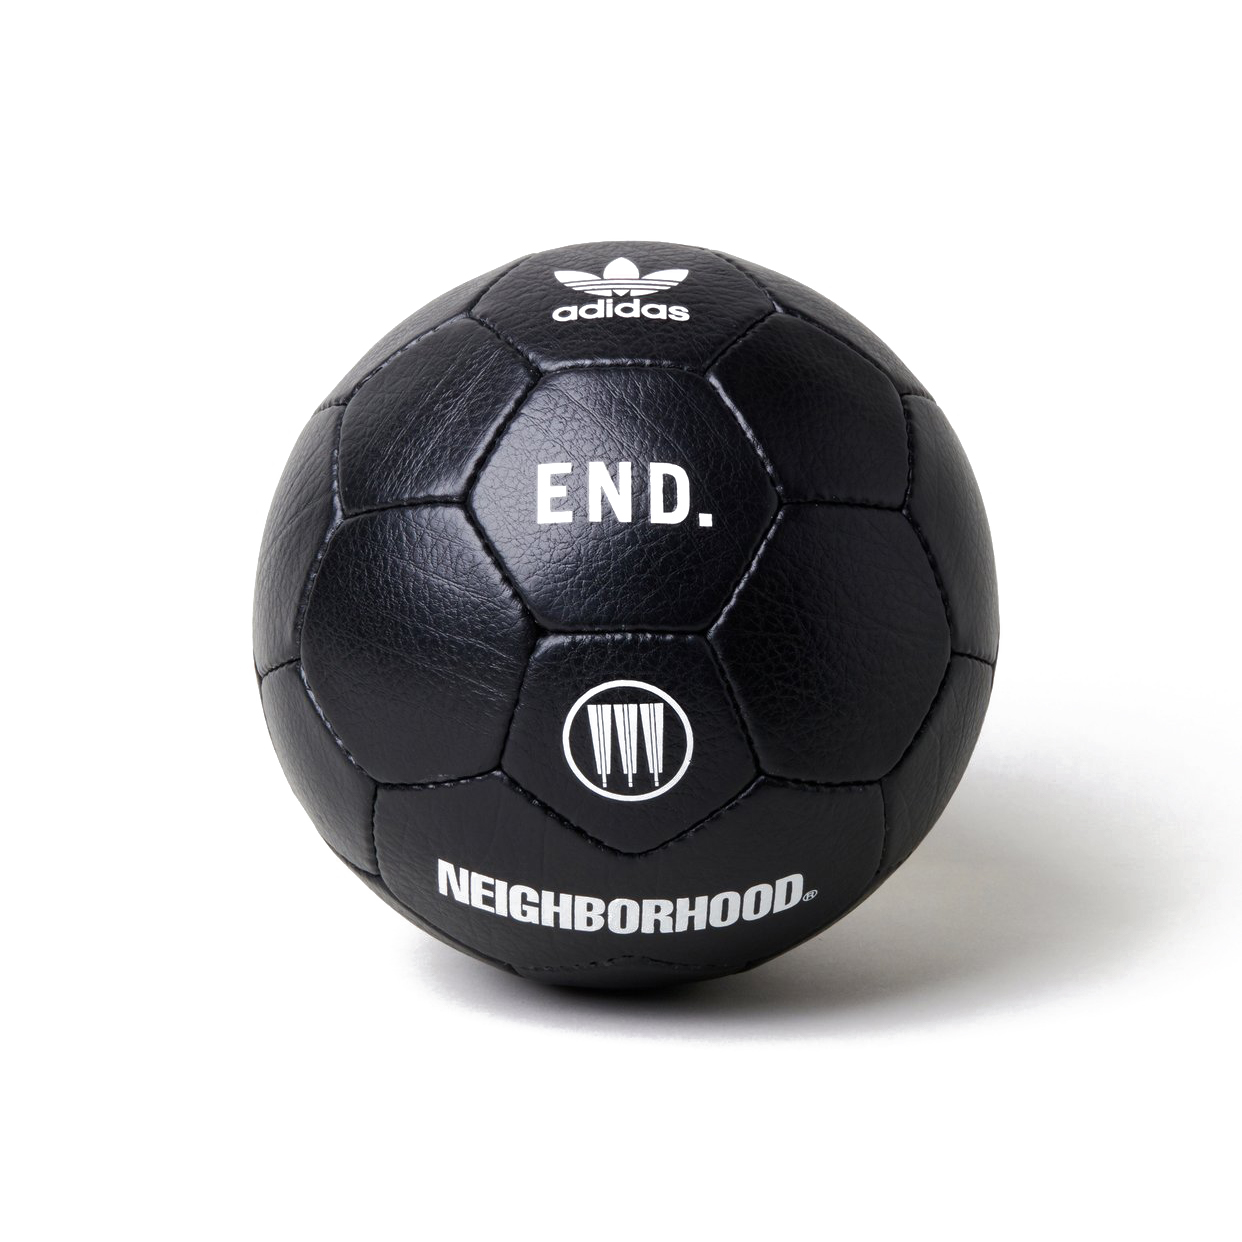 Neighborhood x END x adidas Home Soccer Ball Black